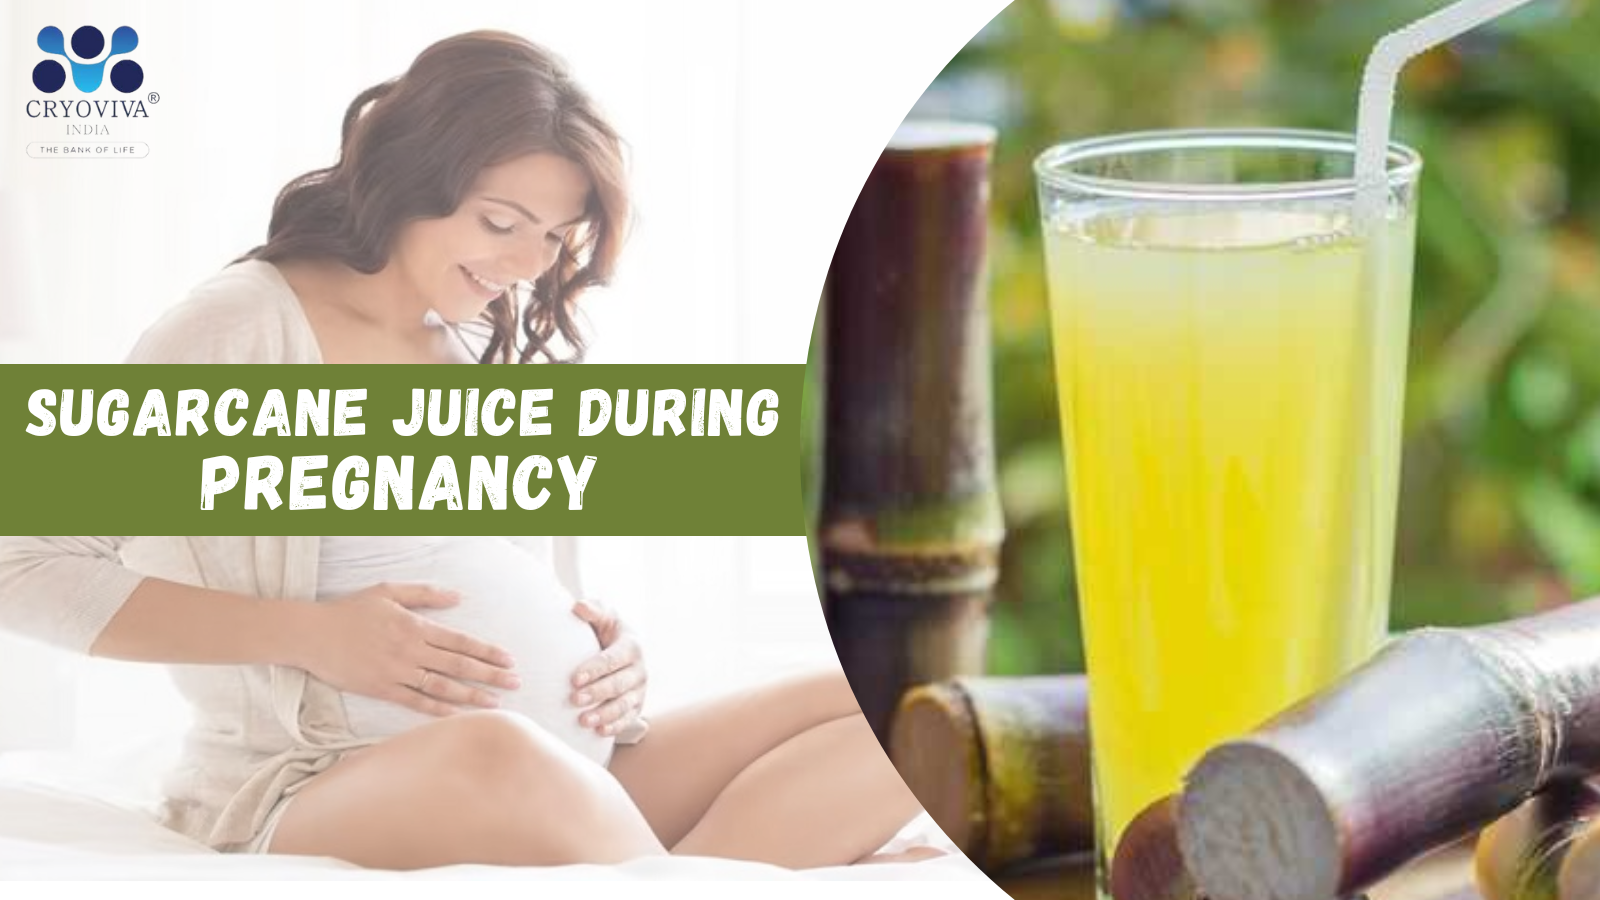 Benefits of Sugarcane Juice During Pregnancy